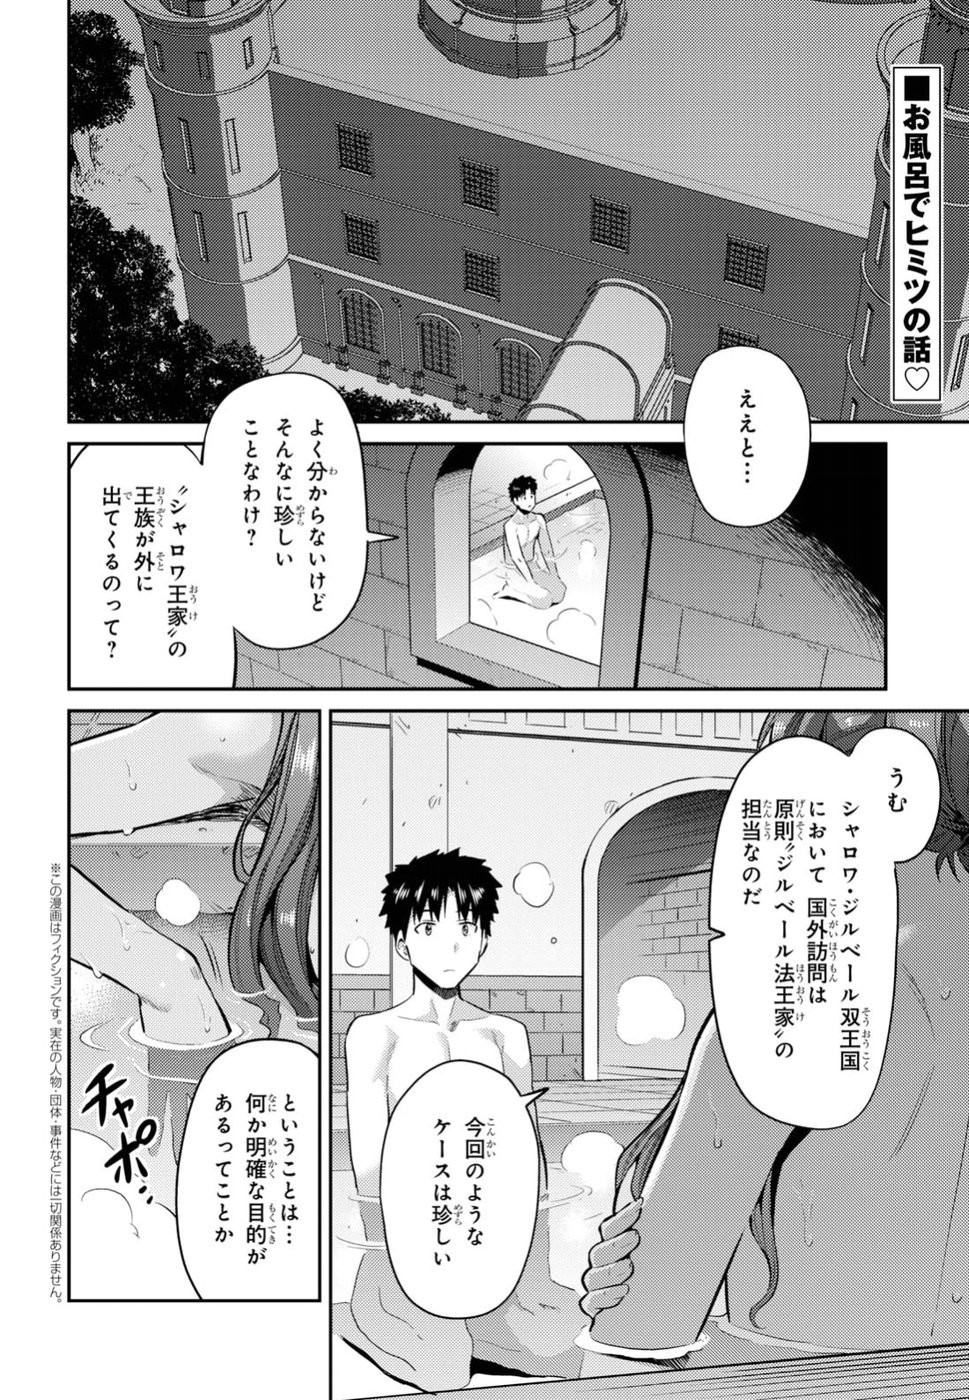 Risou no Himo Seikatsu - Chapter 018 - Page 2